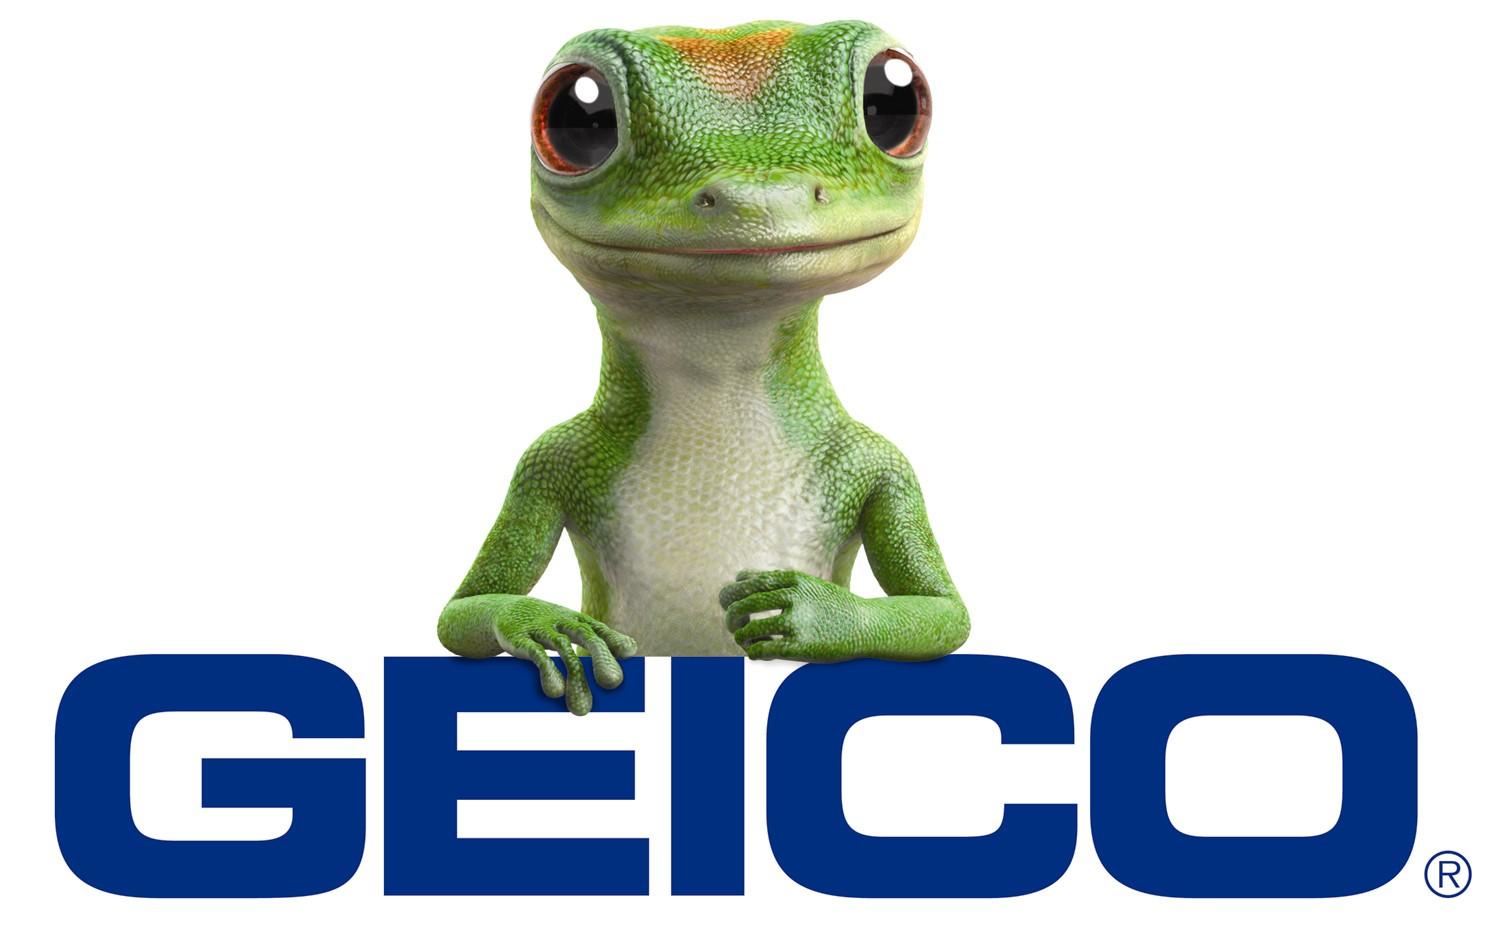 Best Geico Wallpaper Lizard